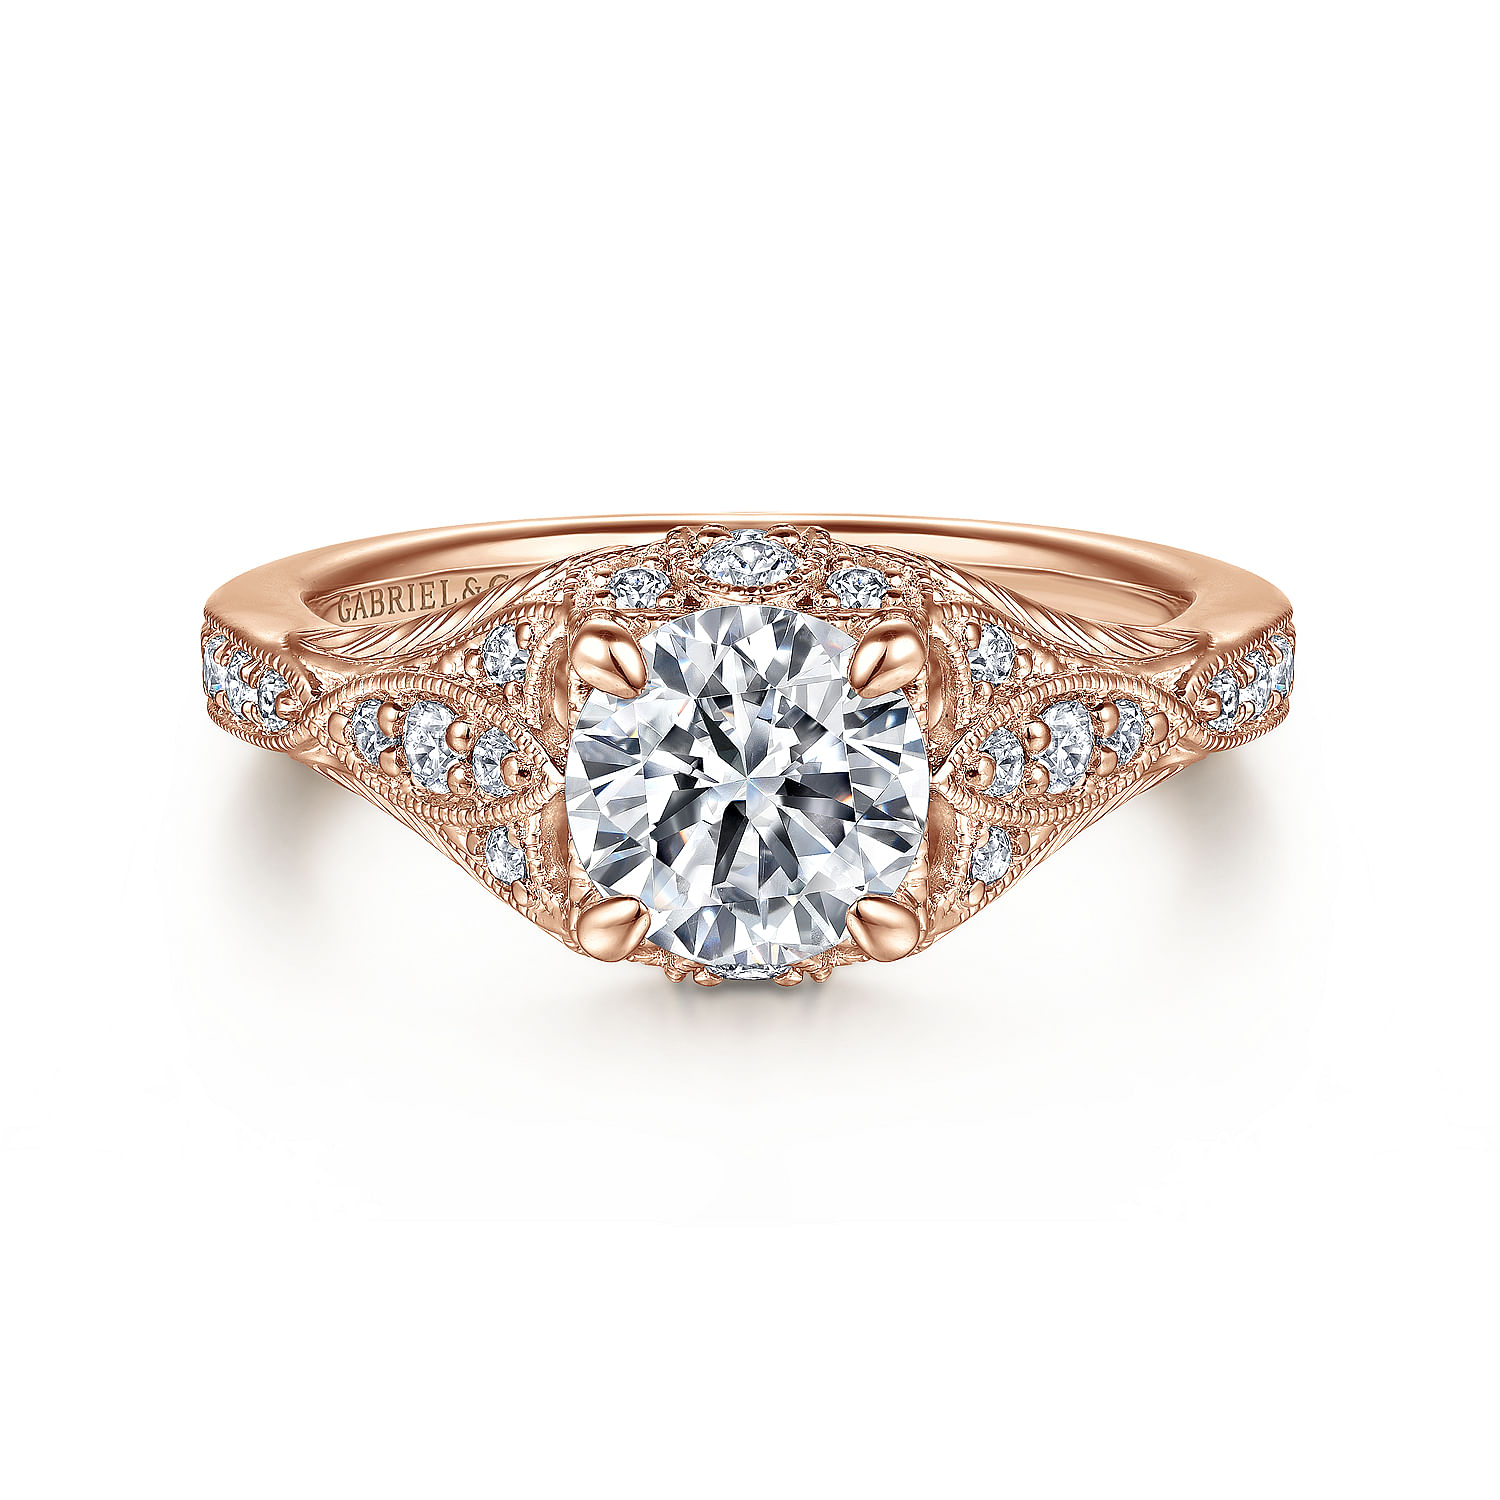 Windsor - Unique 14K Rose Gold Vintage Inspired Diamond Halo Engagement Ring